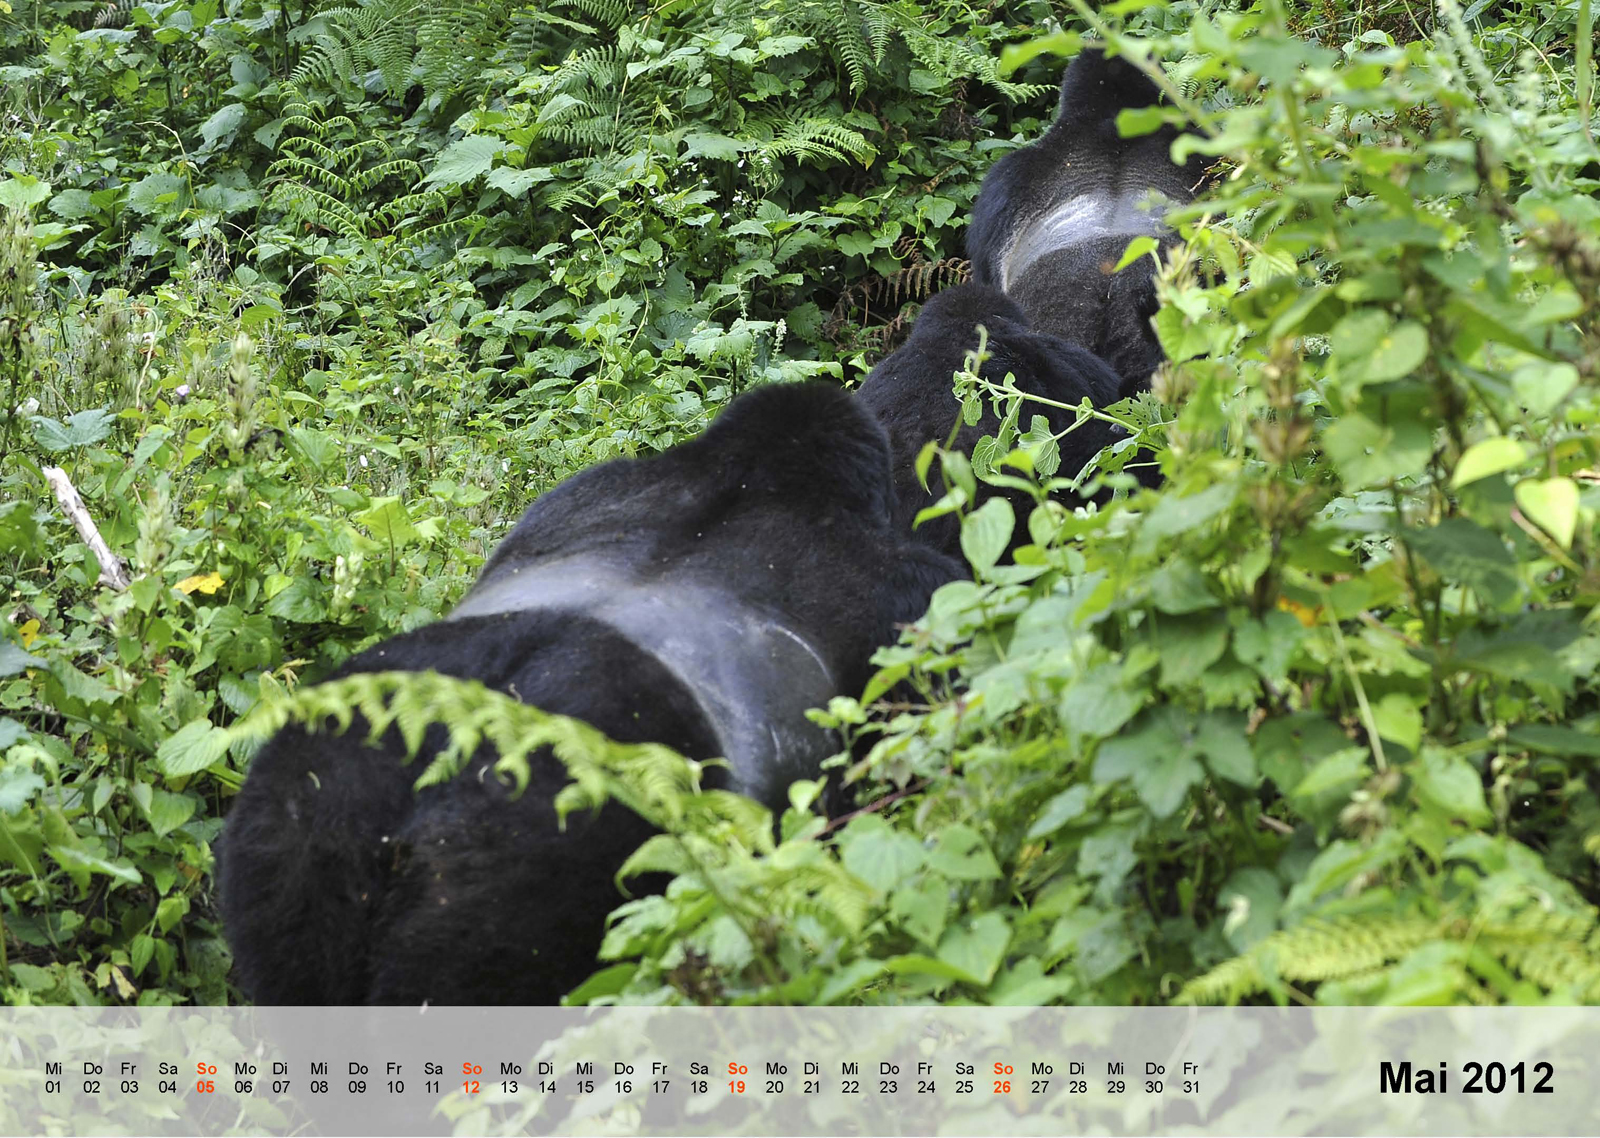 Berggorilla | Mountain gorilla | Bwindi Impenetrable National Park | Uganda - Kalender 2012 - Mai